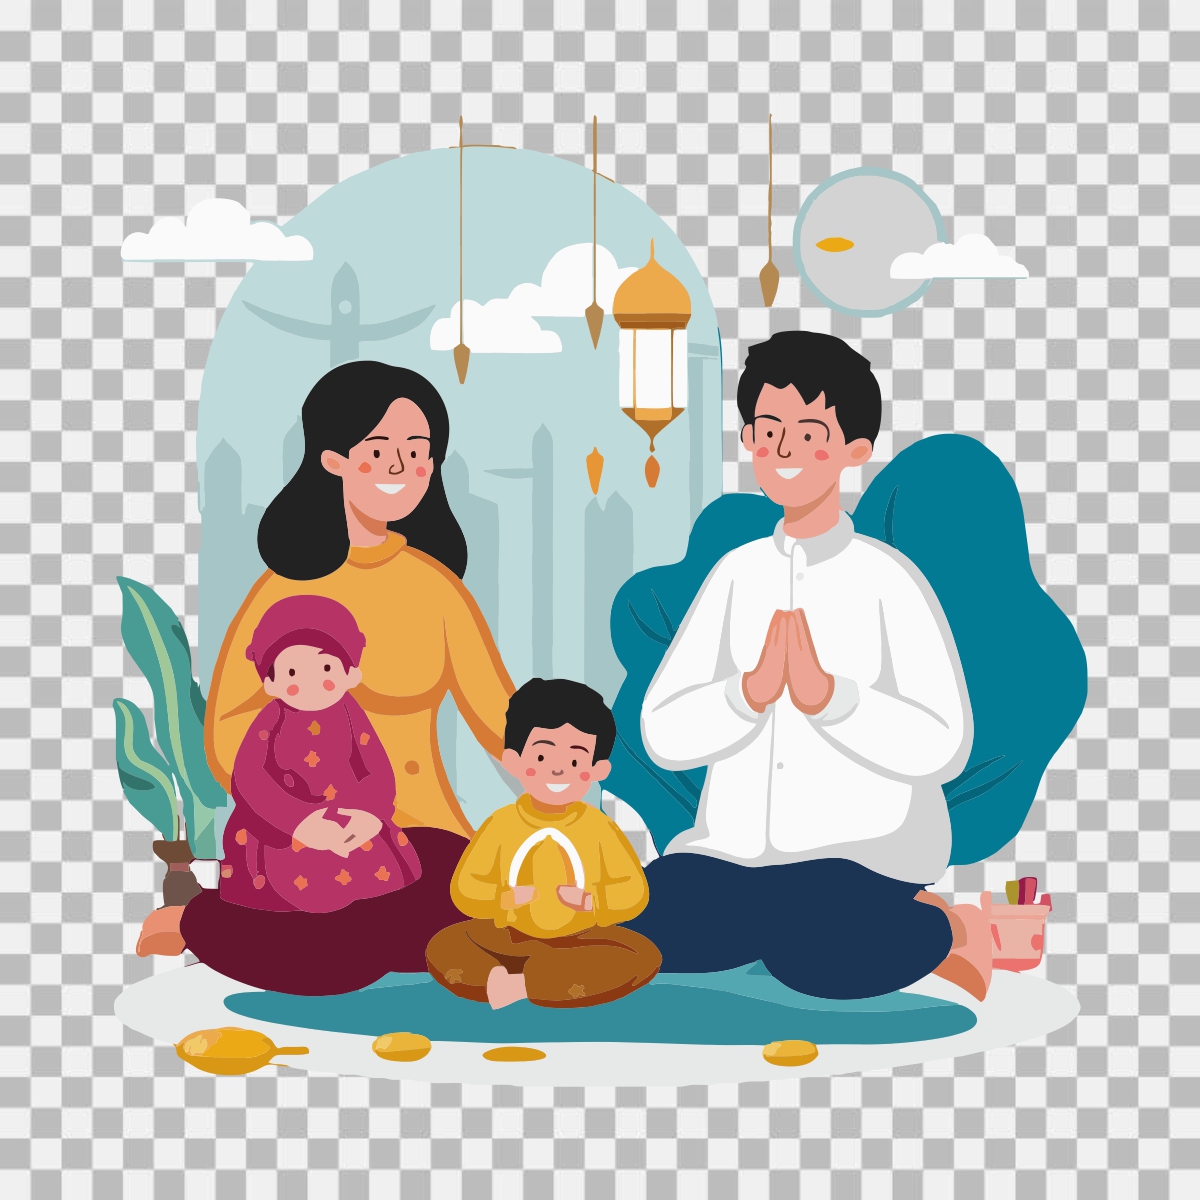 Praying in Ramadan with family stock image